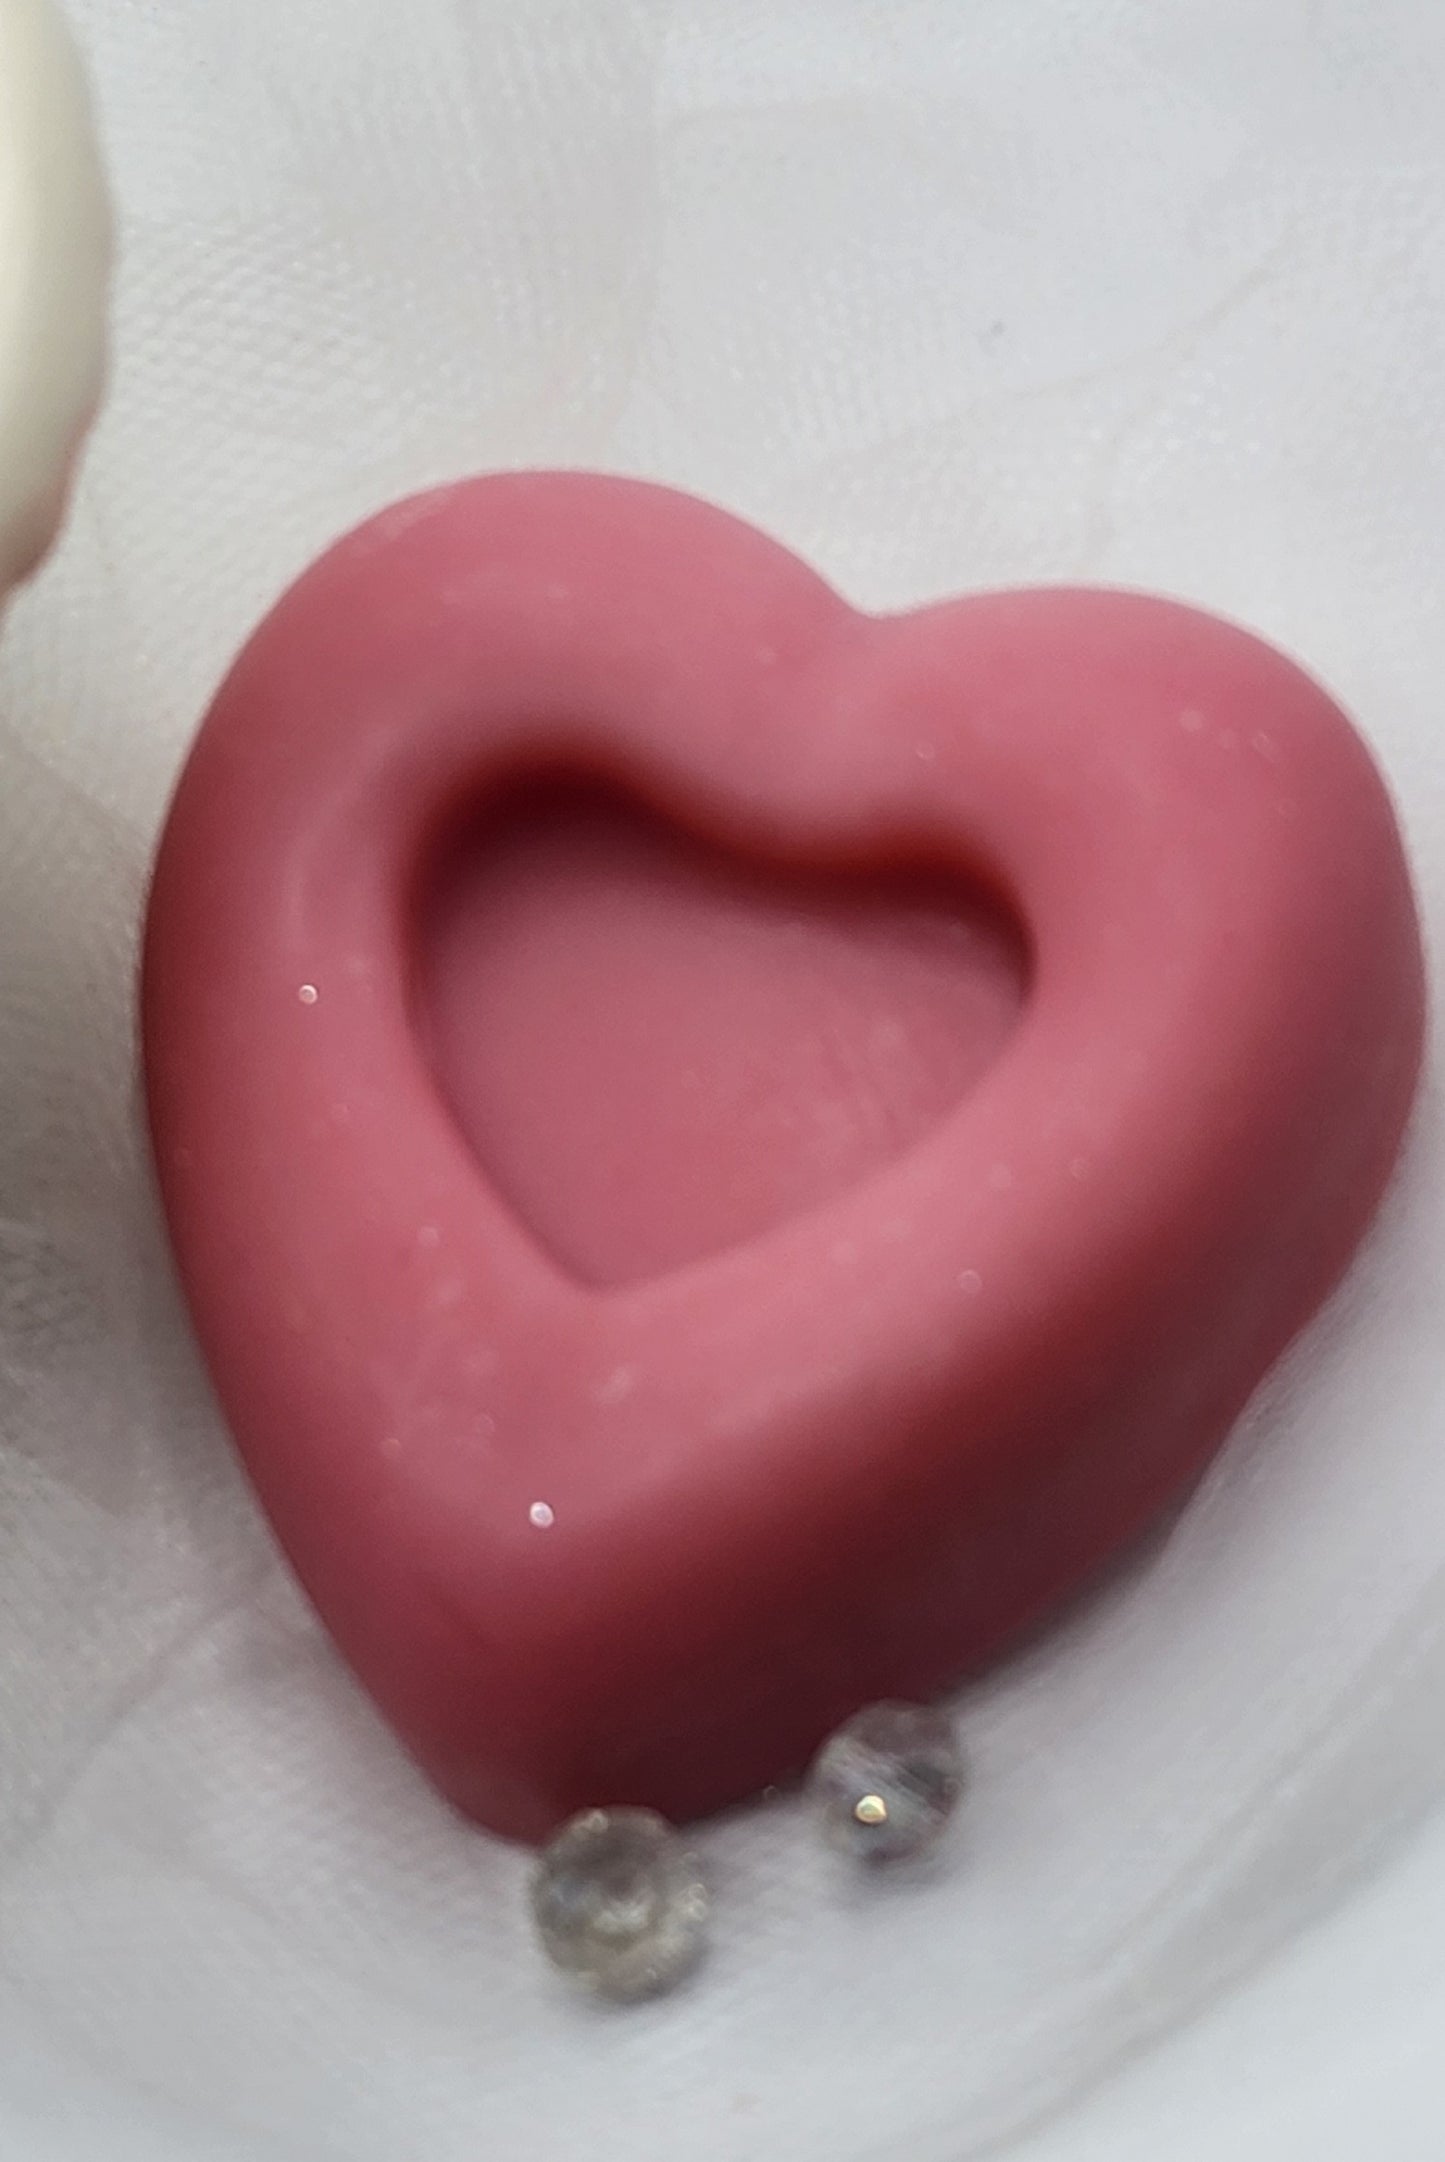 DATE NIGHT Guest Bar Soap Heart Shaped Bar Soap / Bar Soap / Gift Soap / Gift Idea / Handmade Soap / Cold Process Soap